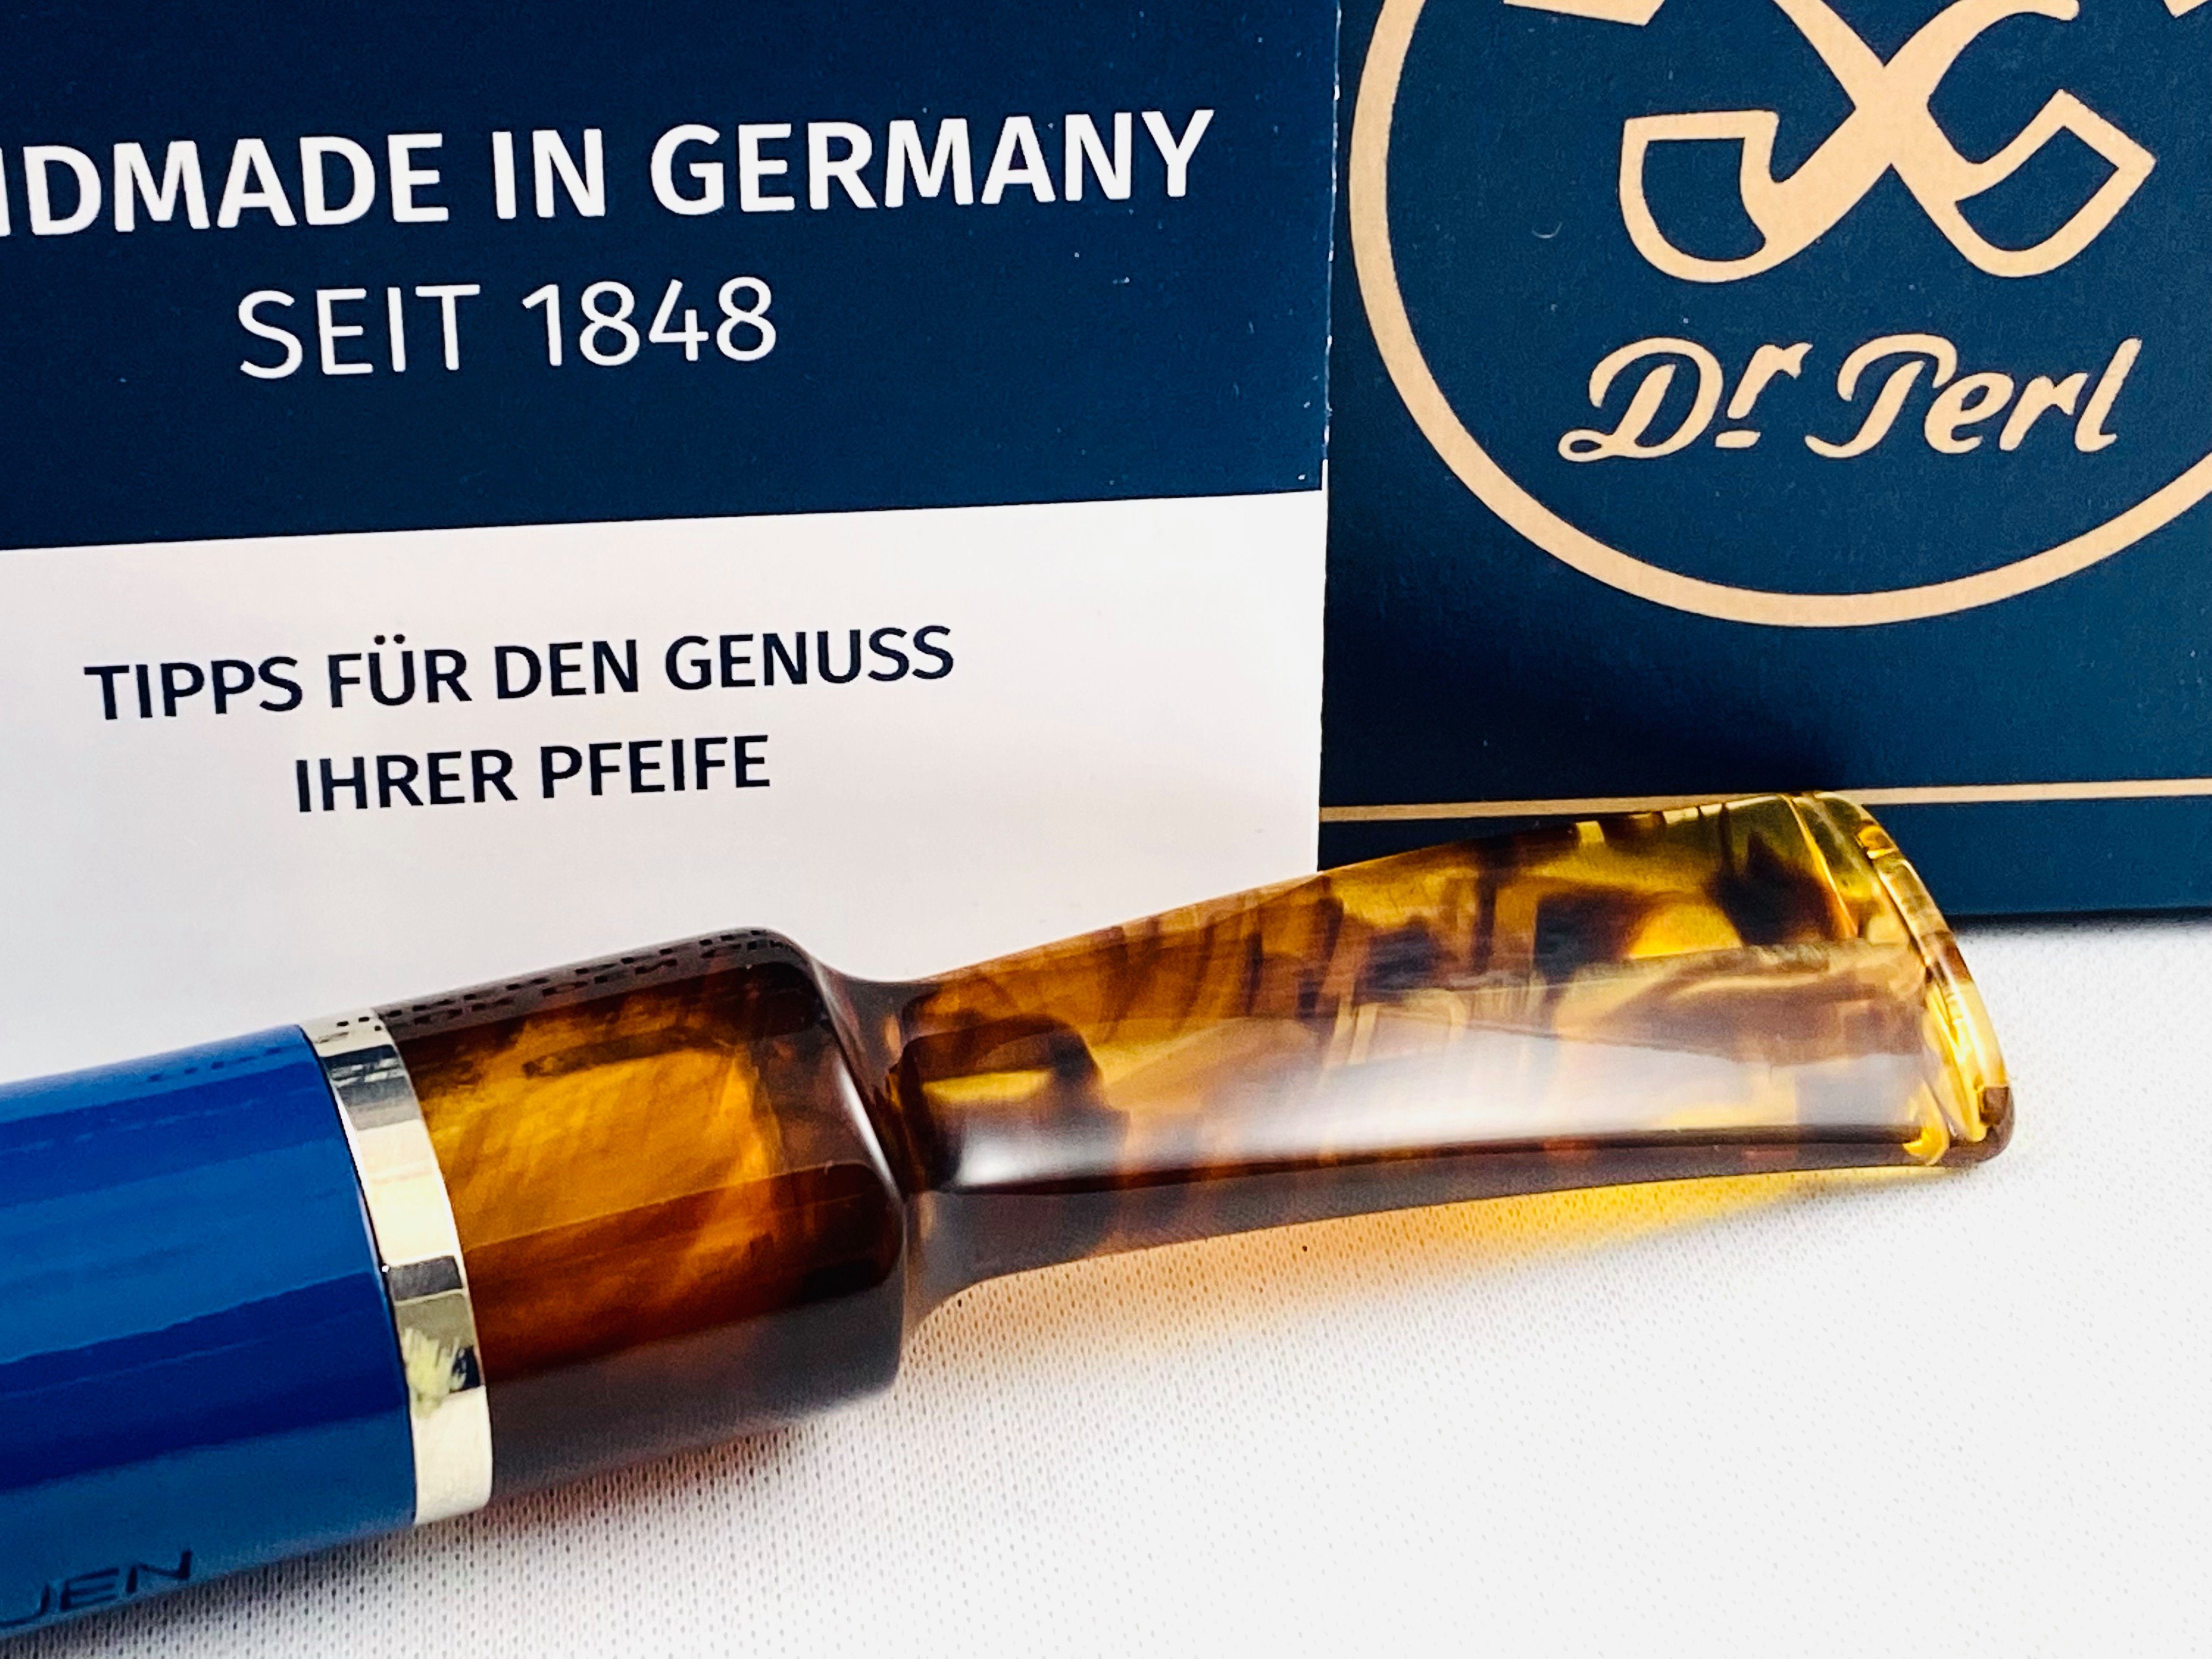 Filter in VAUEN Handpfeife 1540 9mm Pfeife Germany Azzurro Made